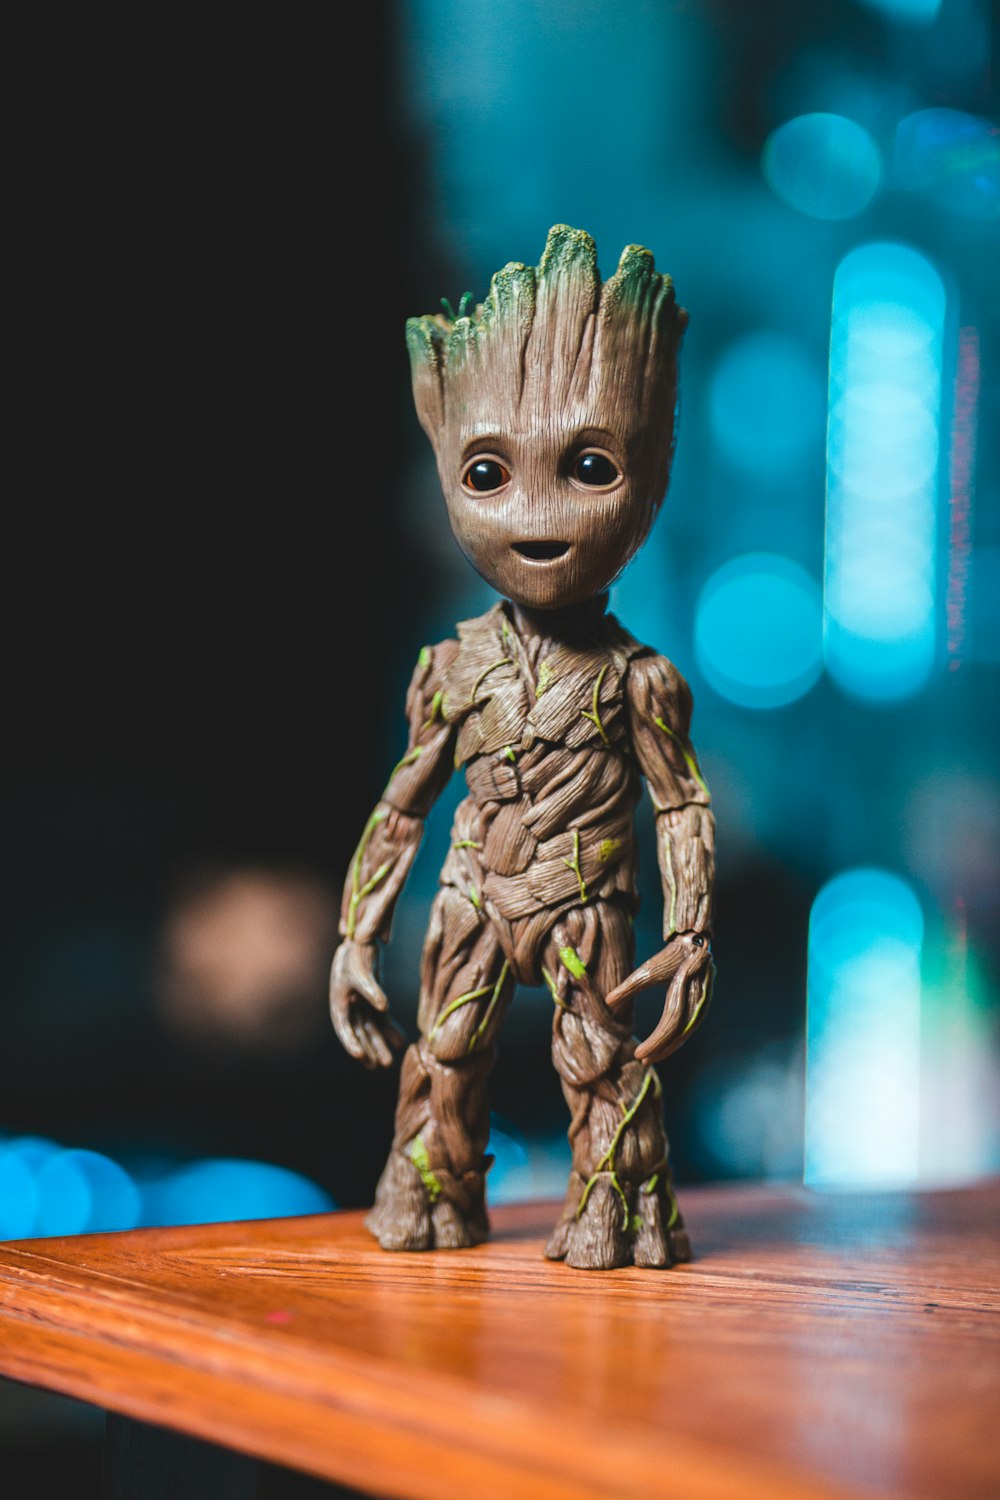 figura humana de madera marrón con ojos verdes